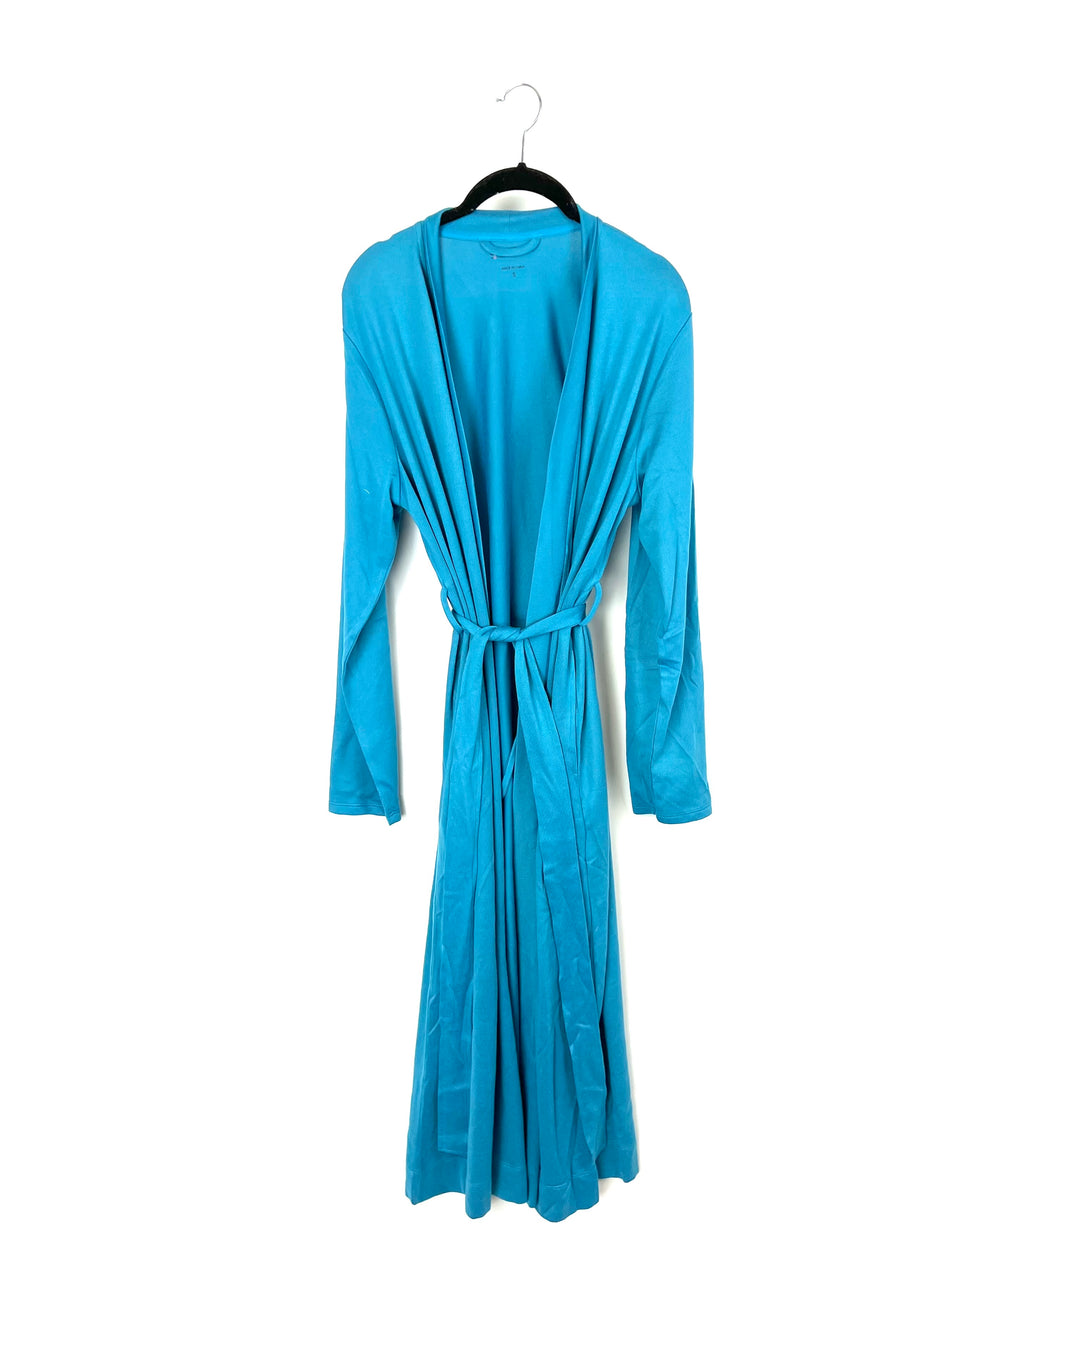 Blue Robe - Small/Medium and Medium/Large